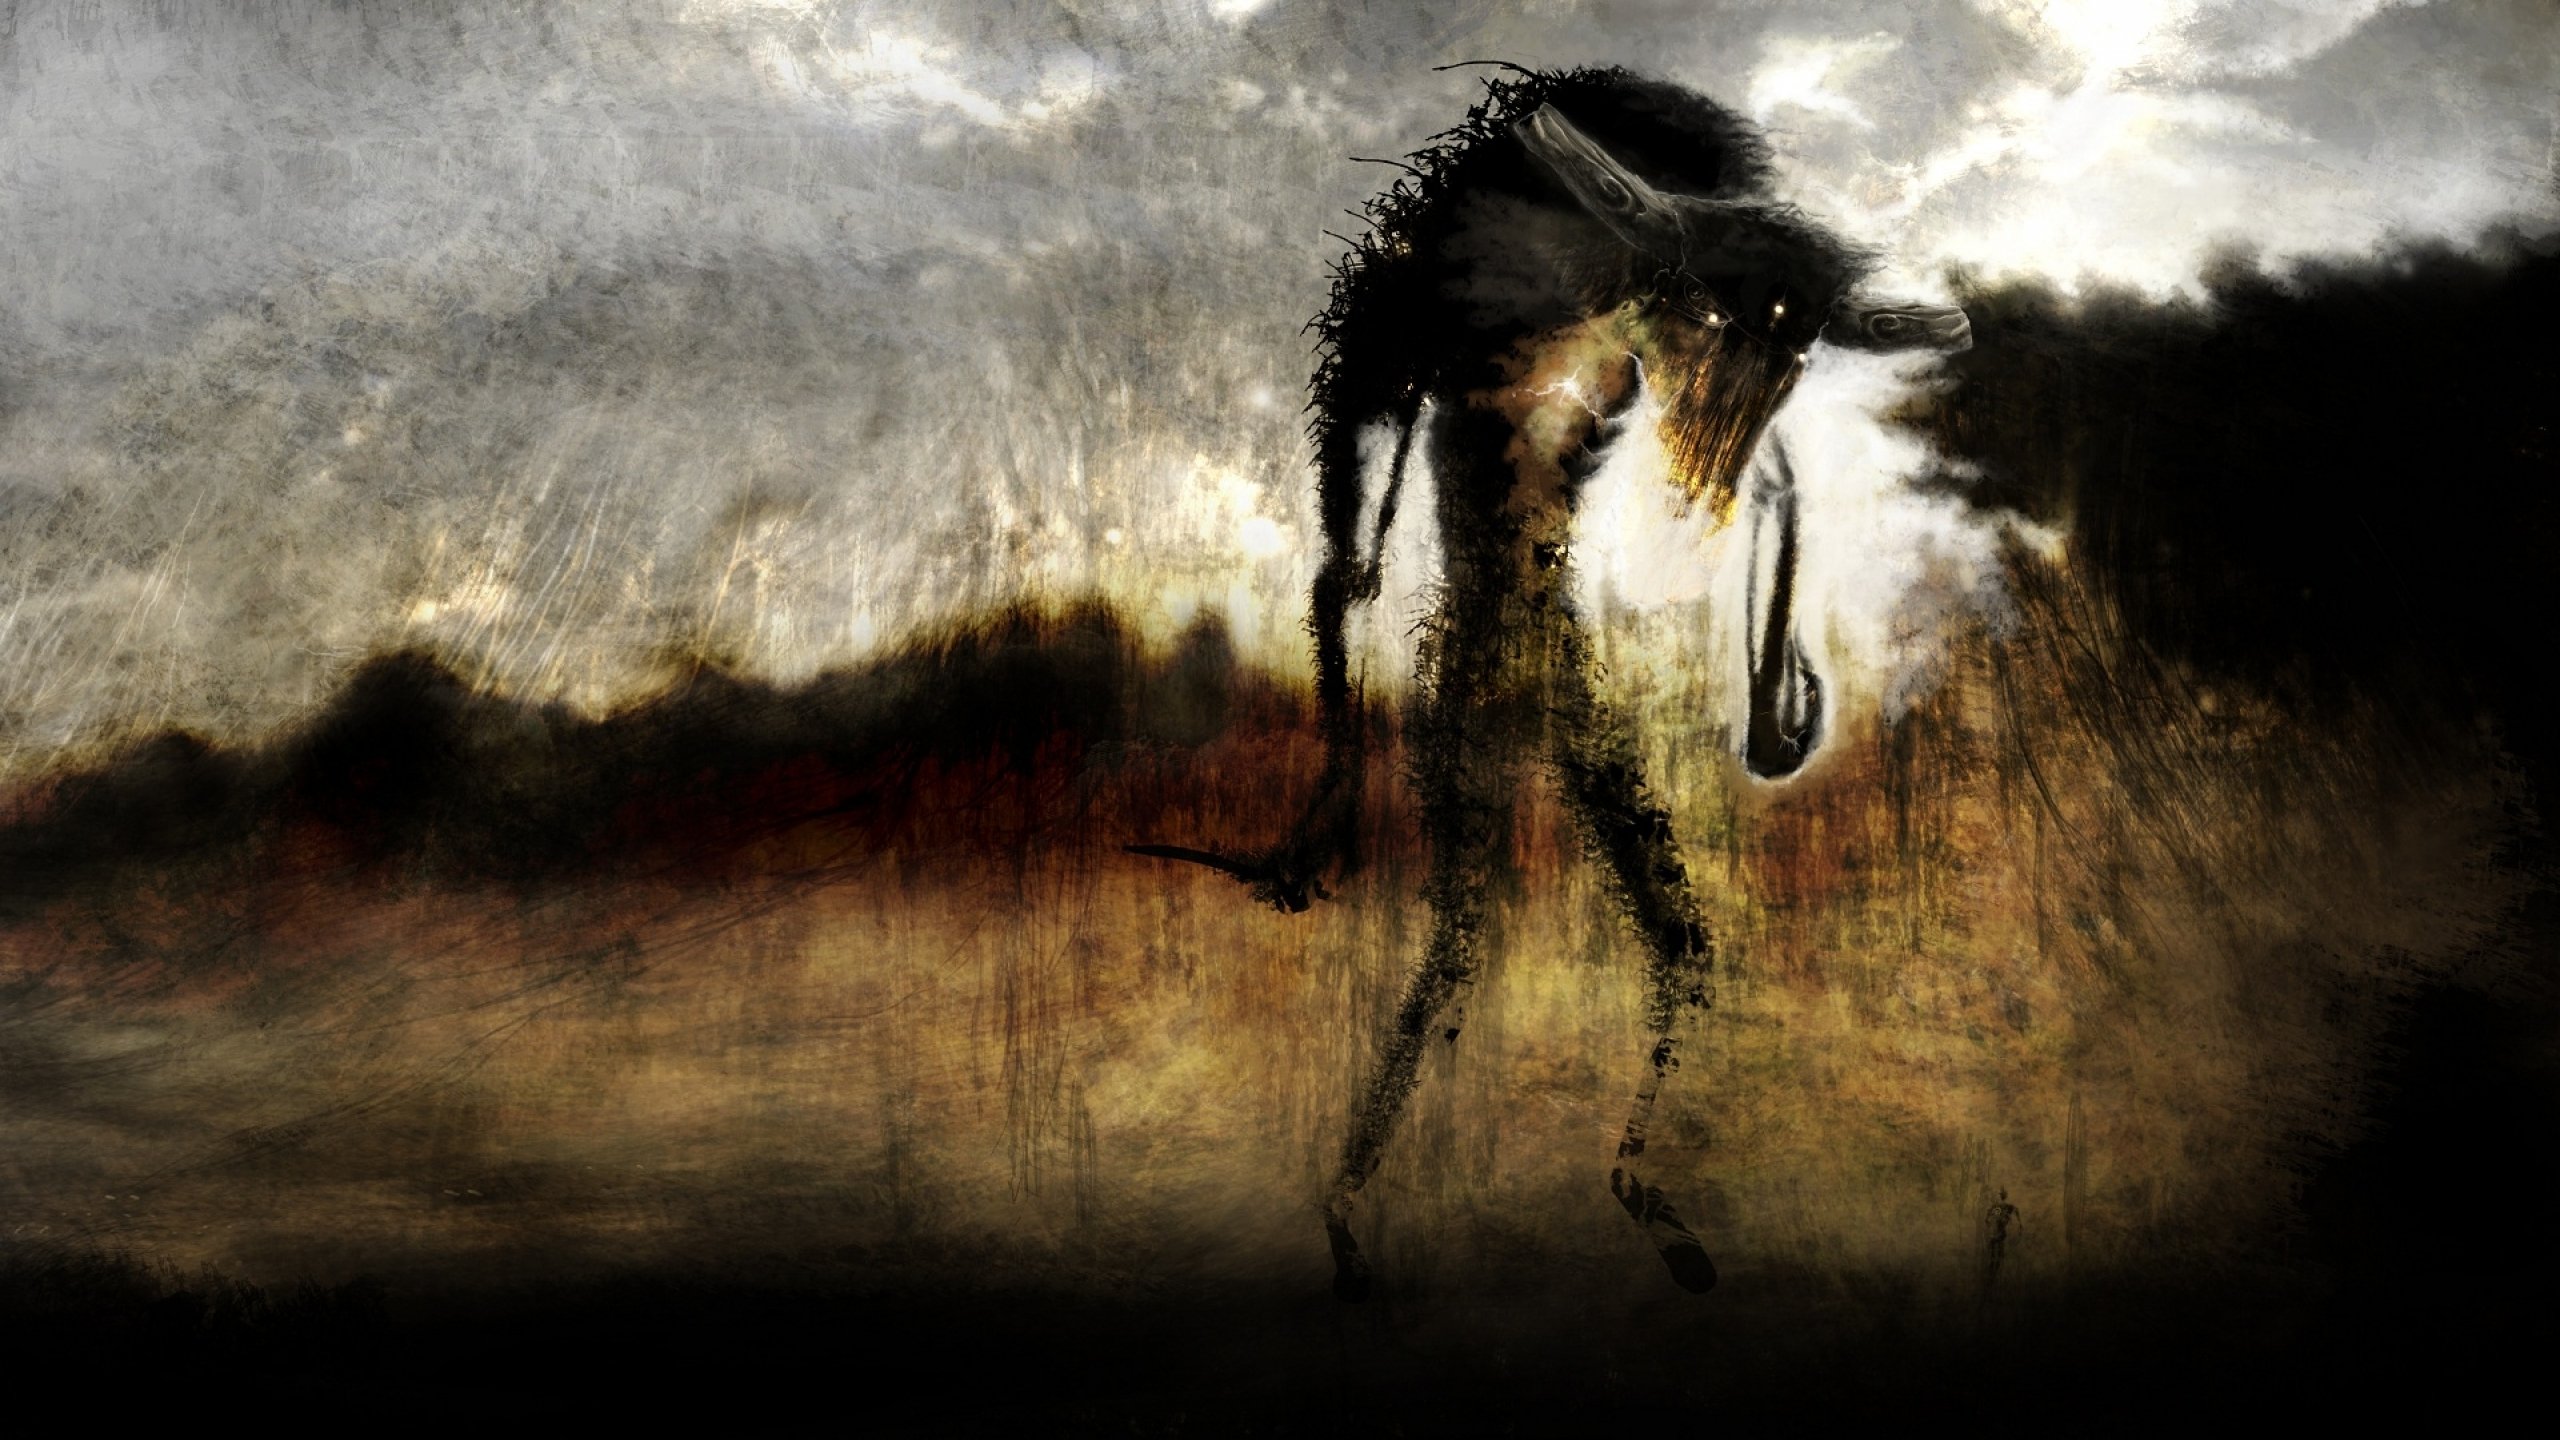 Dark Demon Fantasy Evil Art Artwork Wallpapers Hd Desktop And Mobile Backgrounds